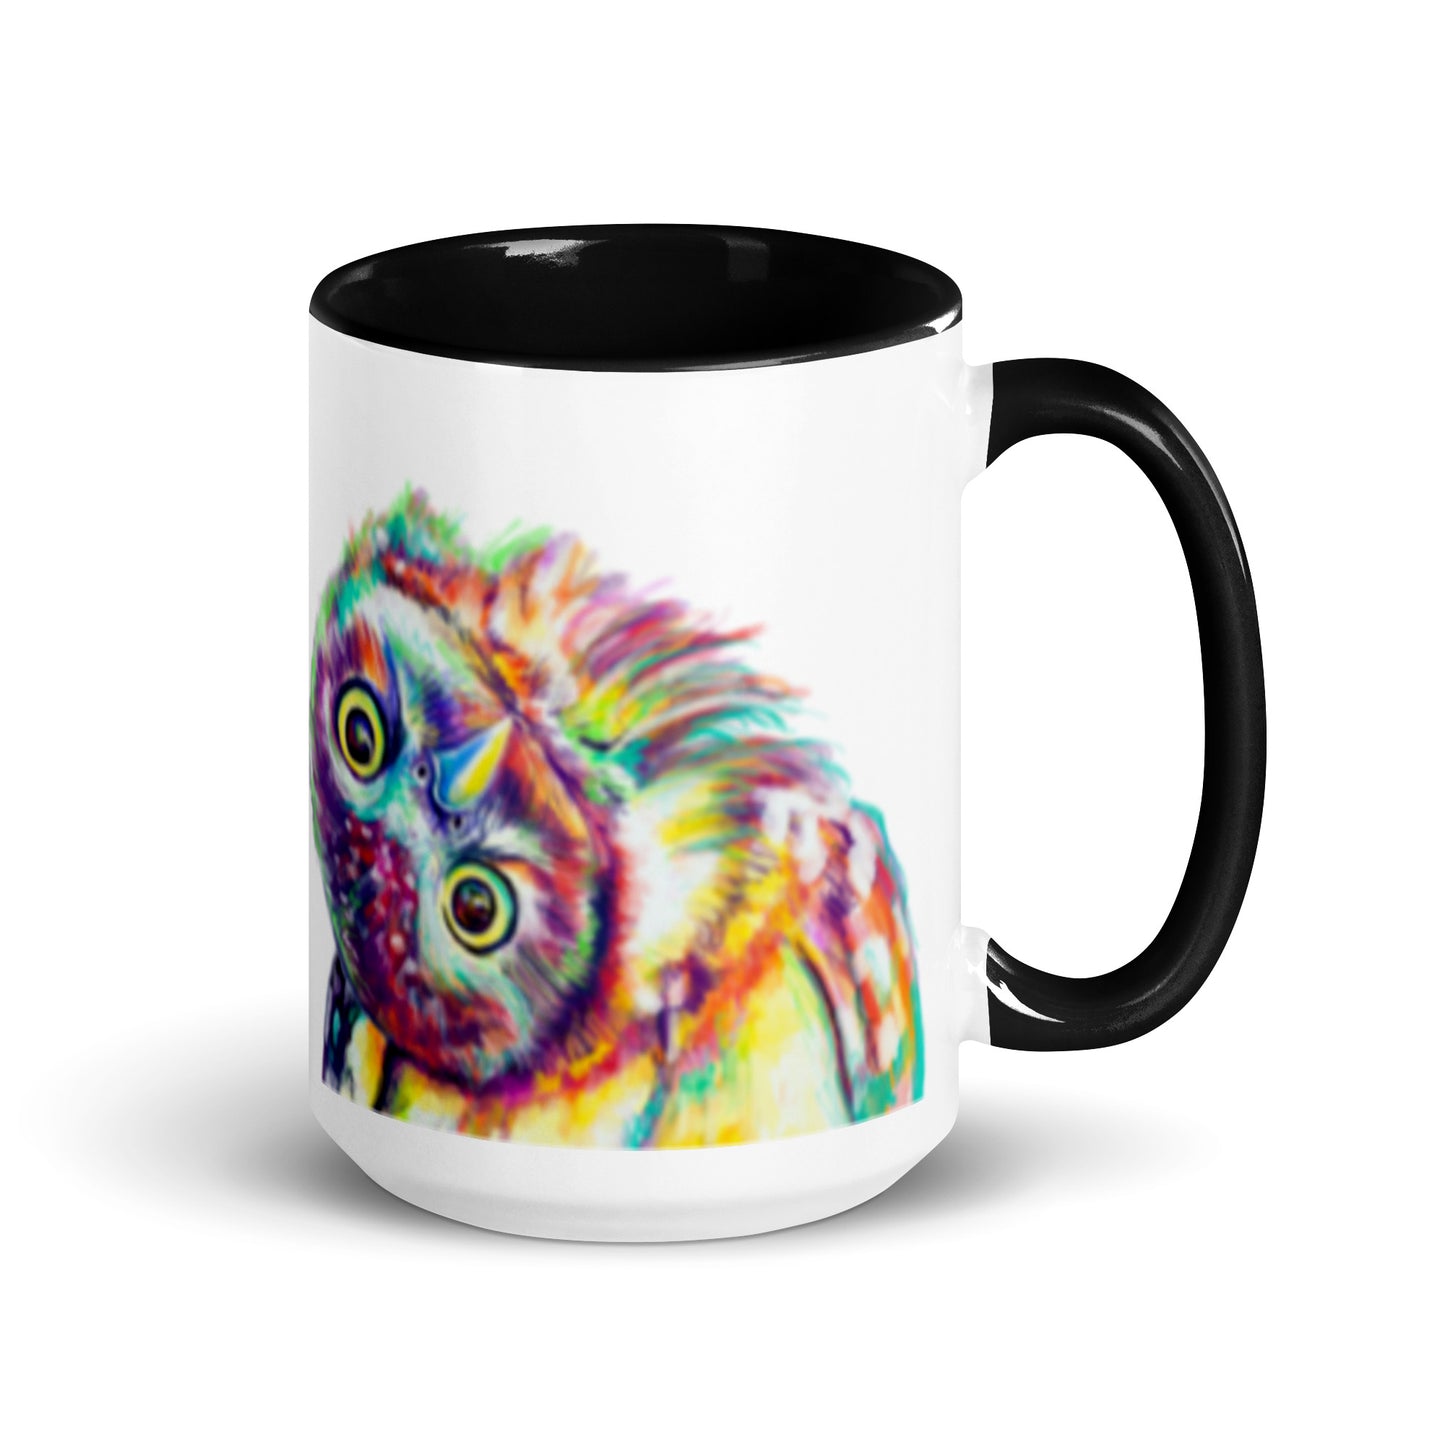 Owl Mug with Color Inside